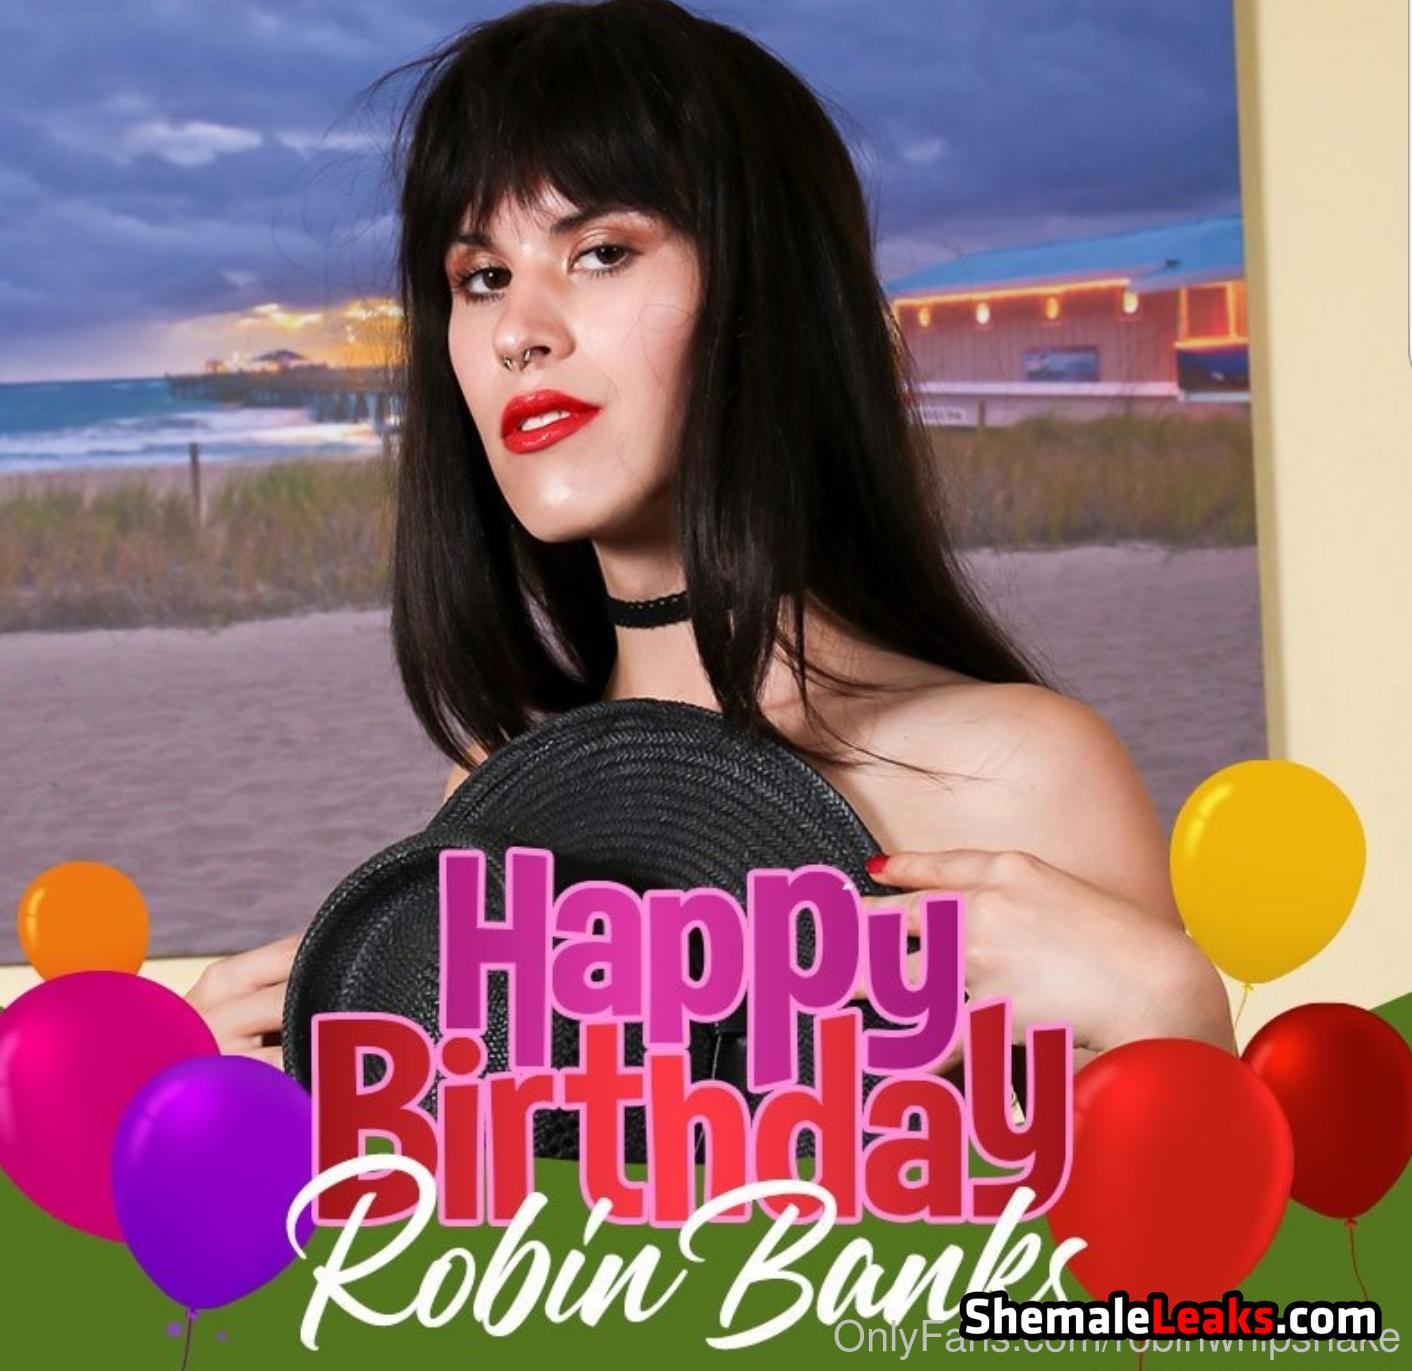 Robin Banks – robinwhipsnake OnlyFans Leaks (41 Photos and 4 Videos)